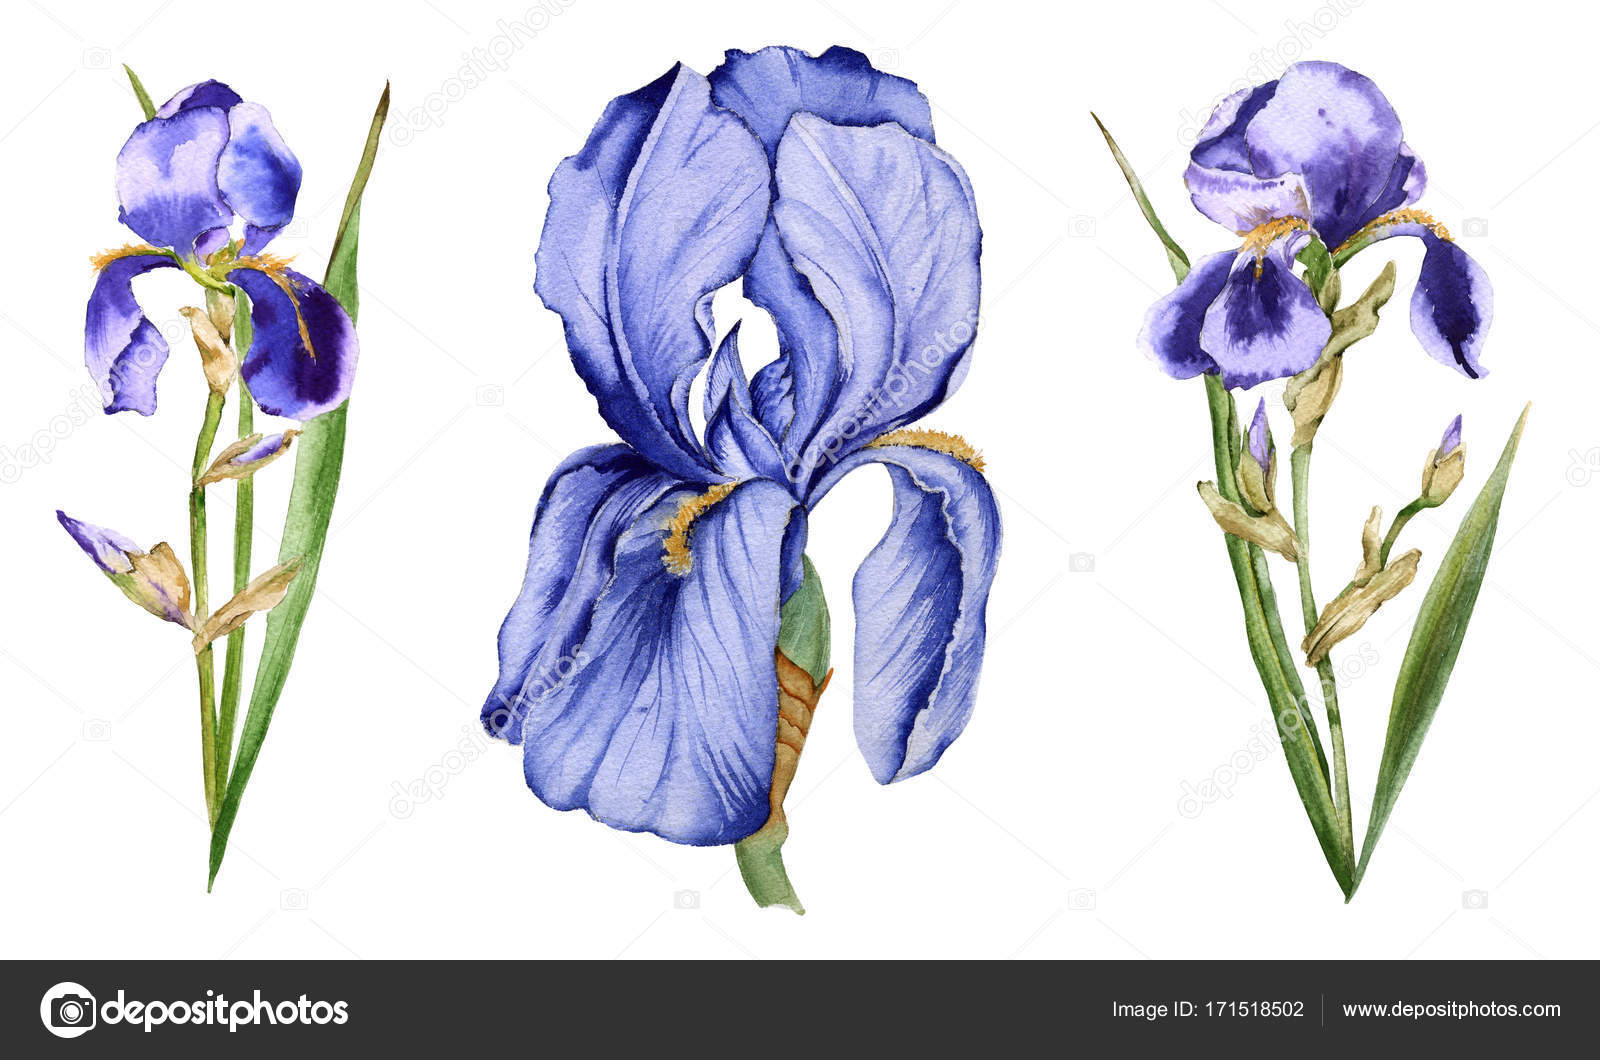 5,019 ilustraciones de stock de Flor iris | Depositphotos®